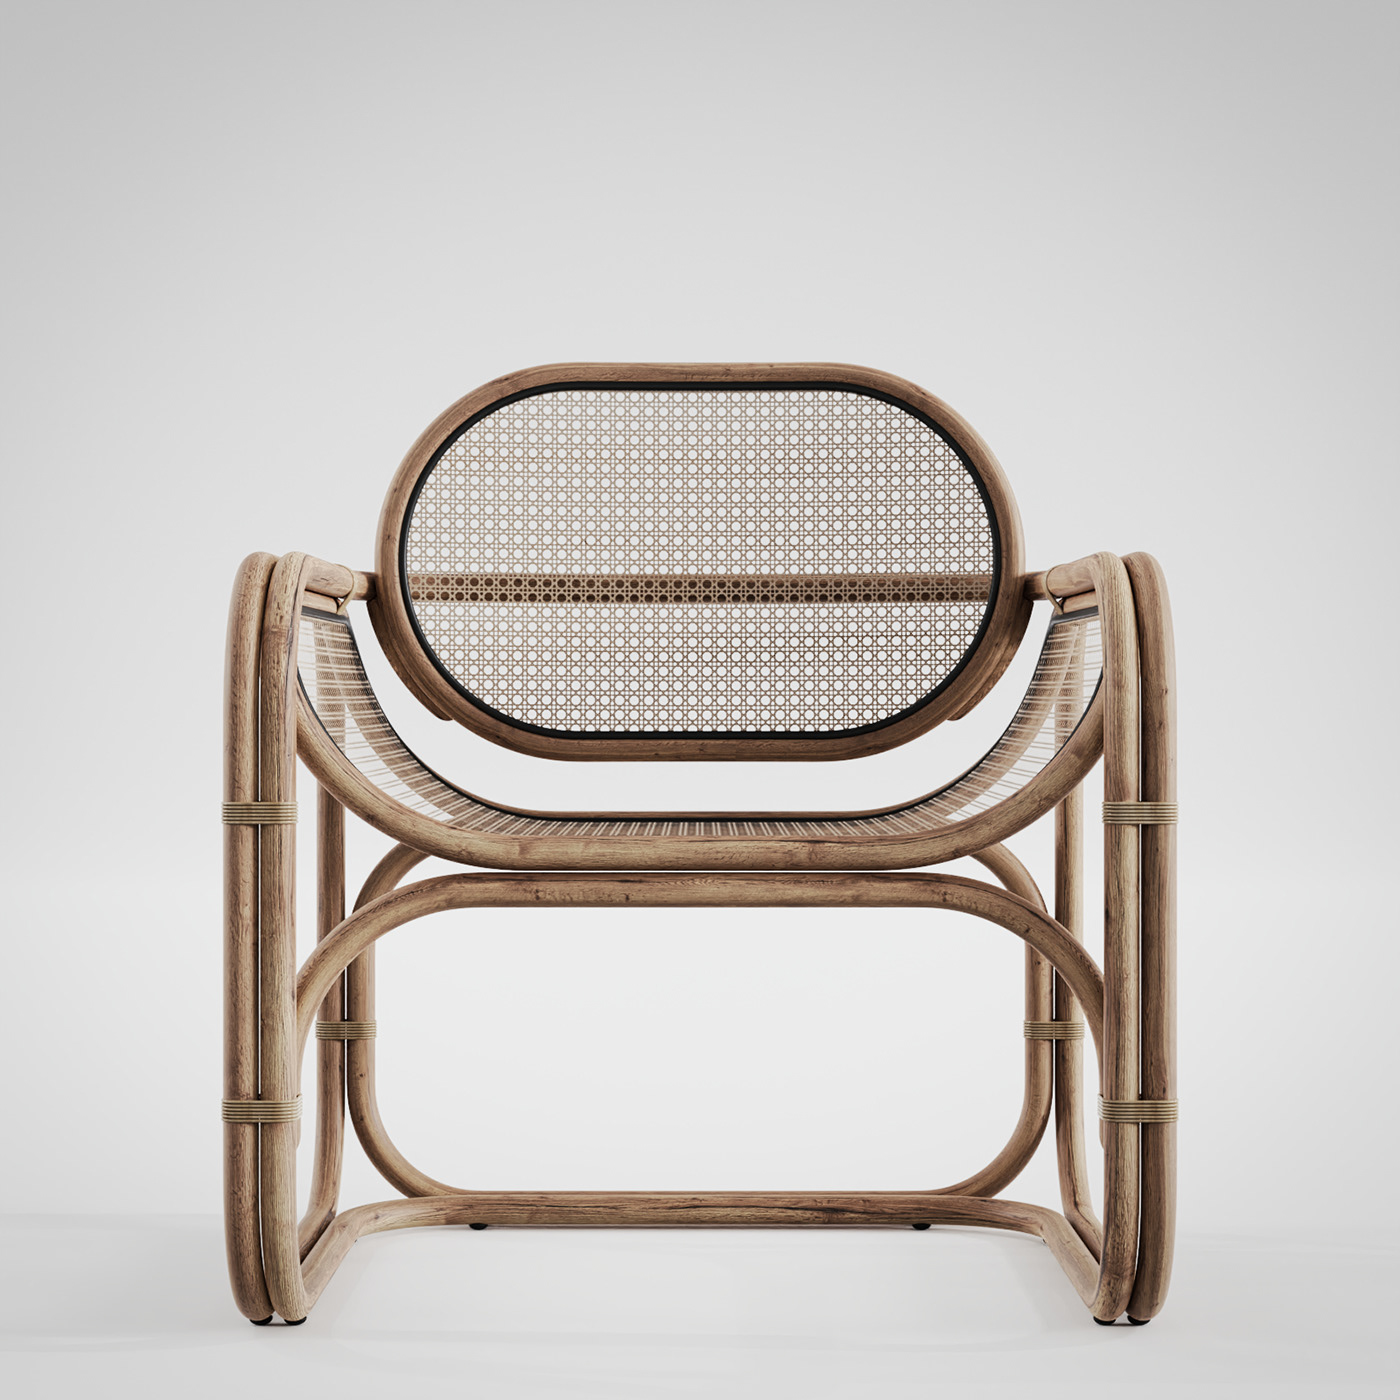 3dmodel 3dsmax archviz blender chair corona download free furniture vray